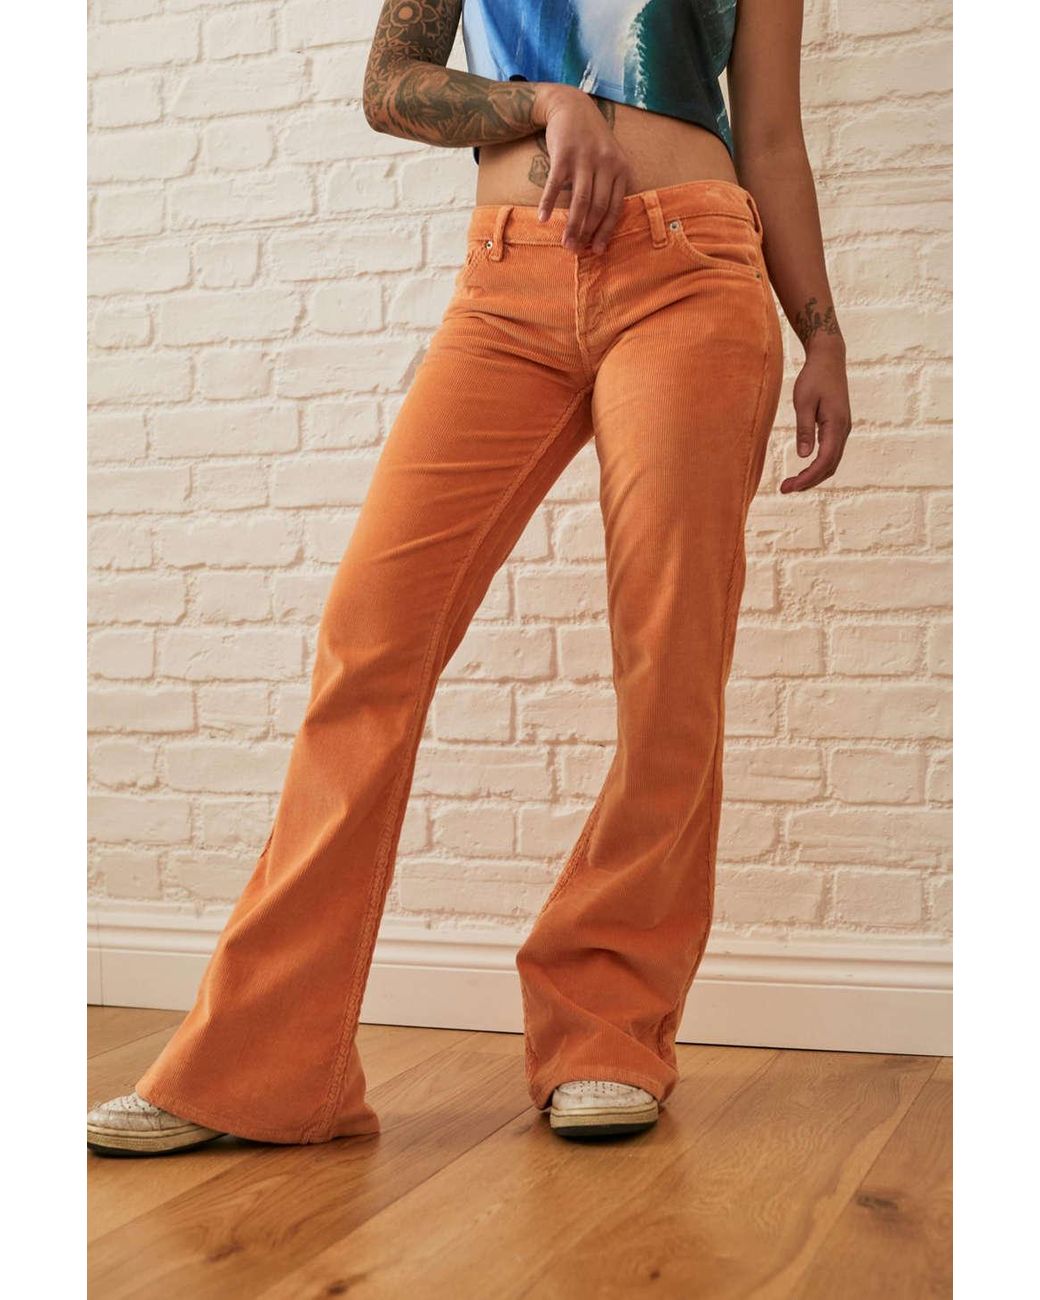 BDG Orange Floral Corduroy Jeans